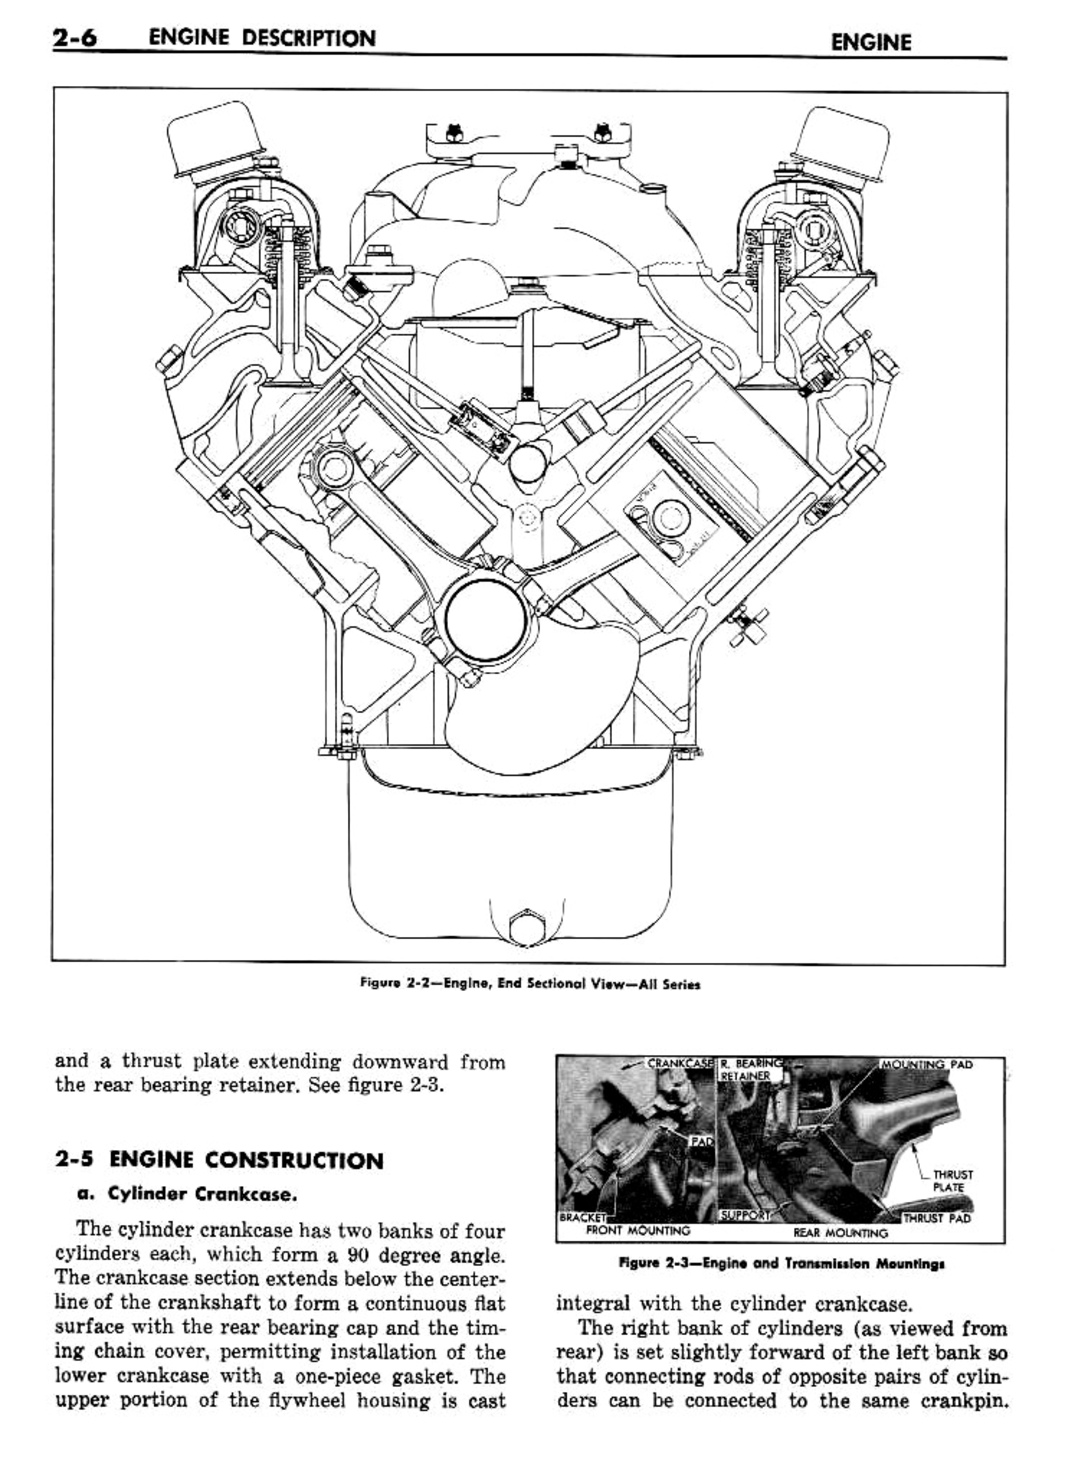 n_03 1957 Buick Shop Manual - Engine-006-006.jpg